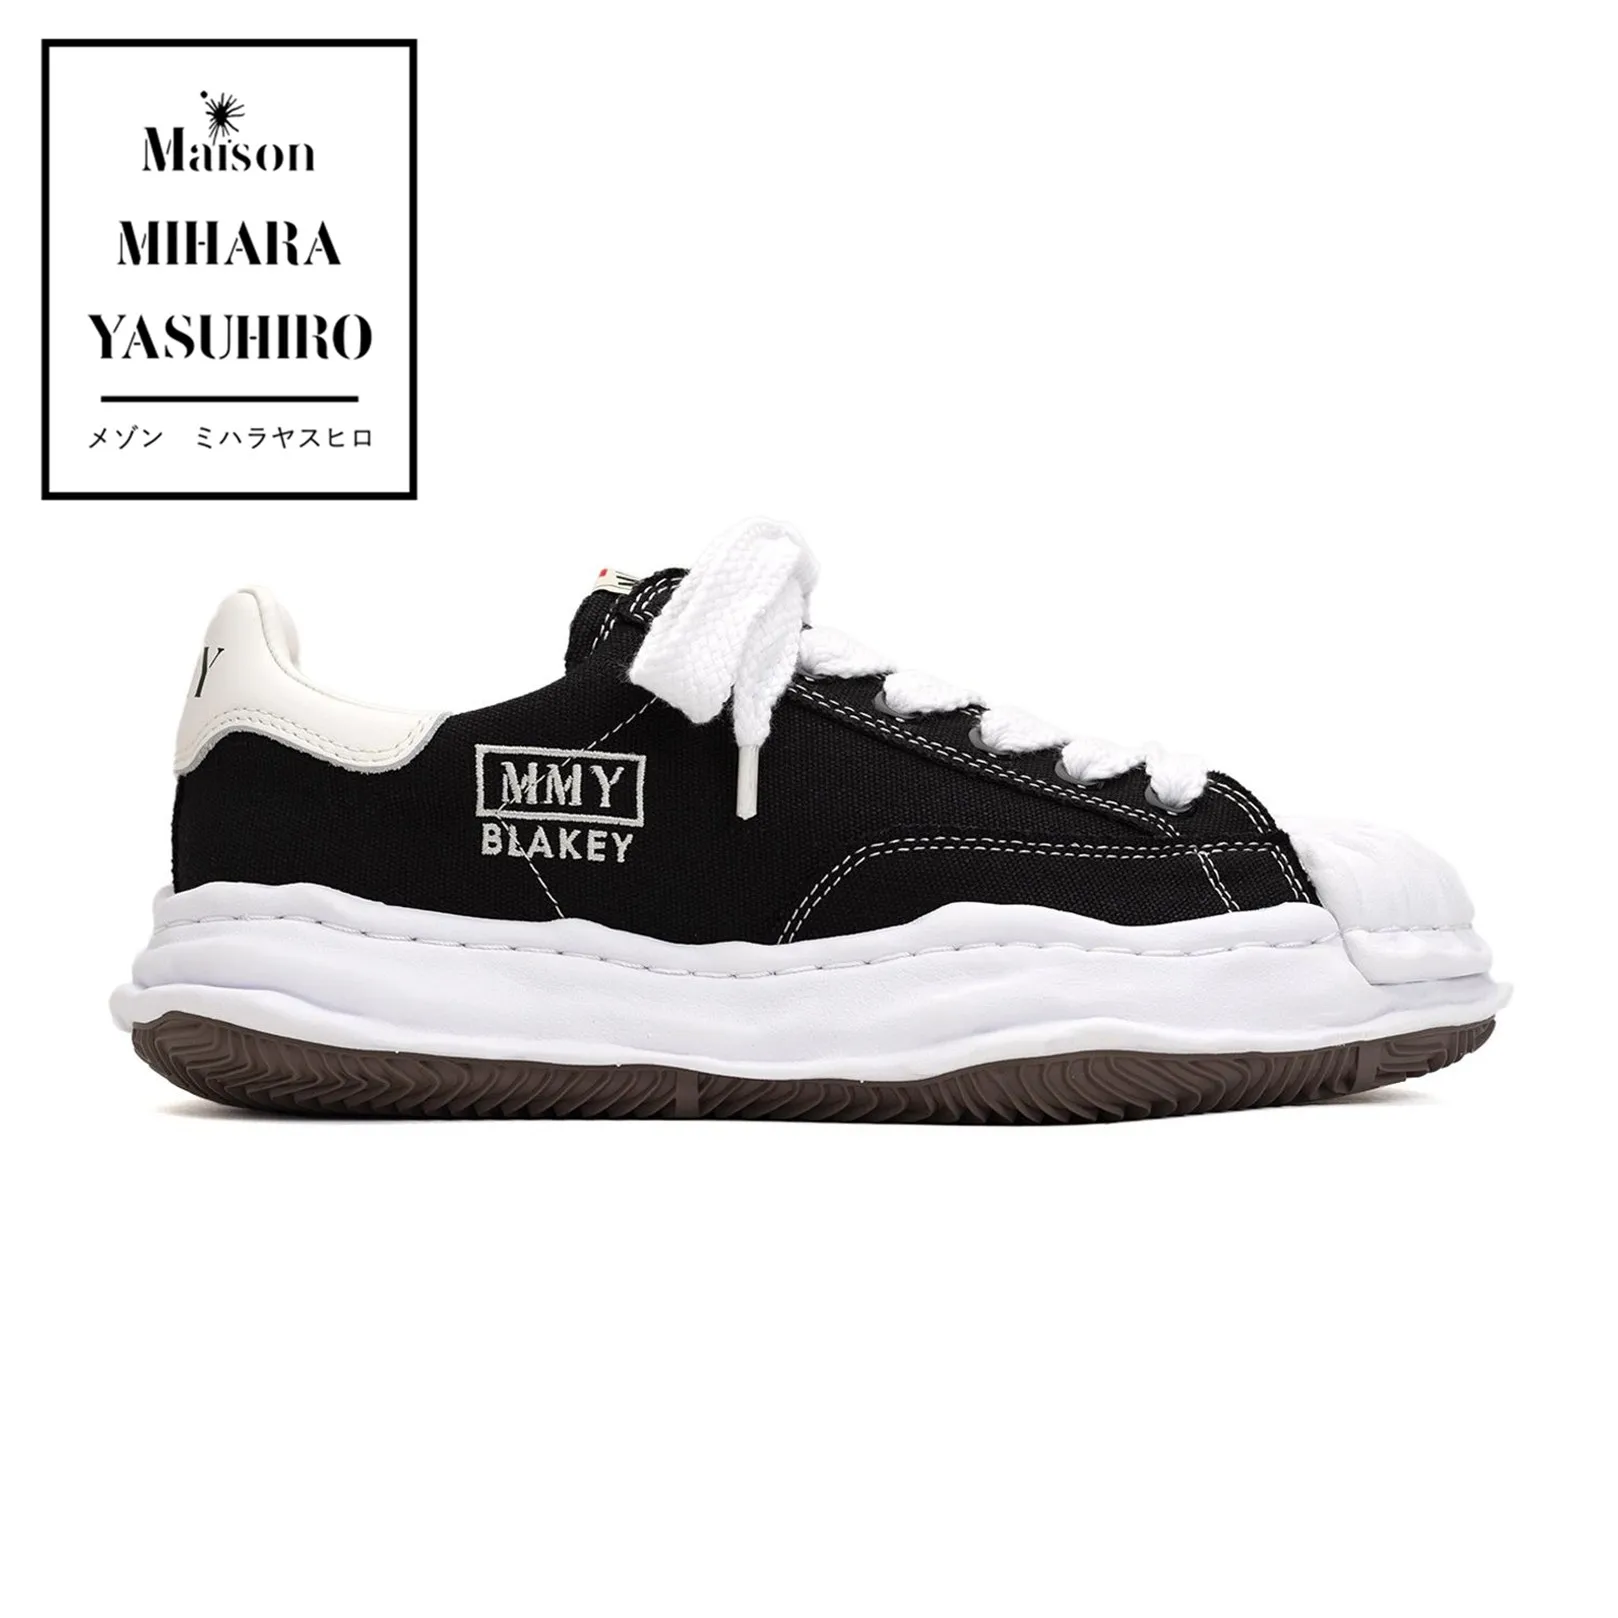 

MMY Maison MIHARA YASUHIRO Wayne BLAKEY VL OG Sole Leather Low-top Sneaker Black White Men's Casual shoes Women's polyester